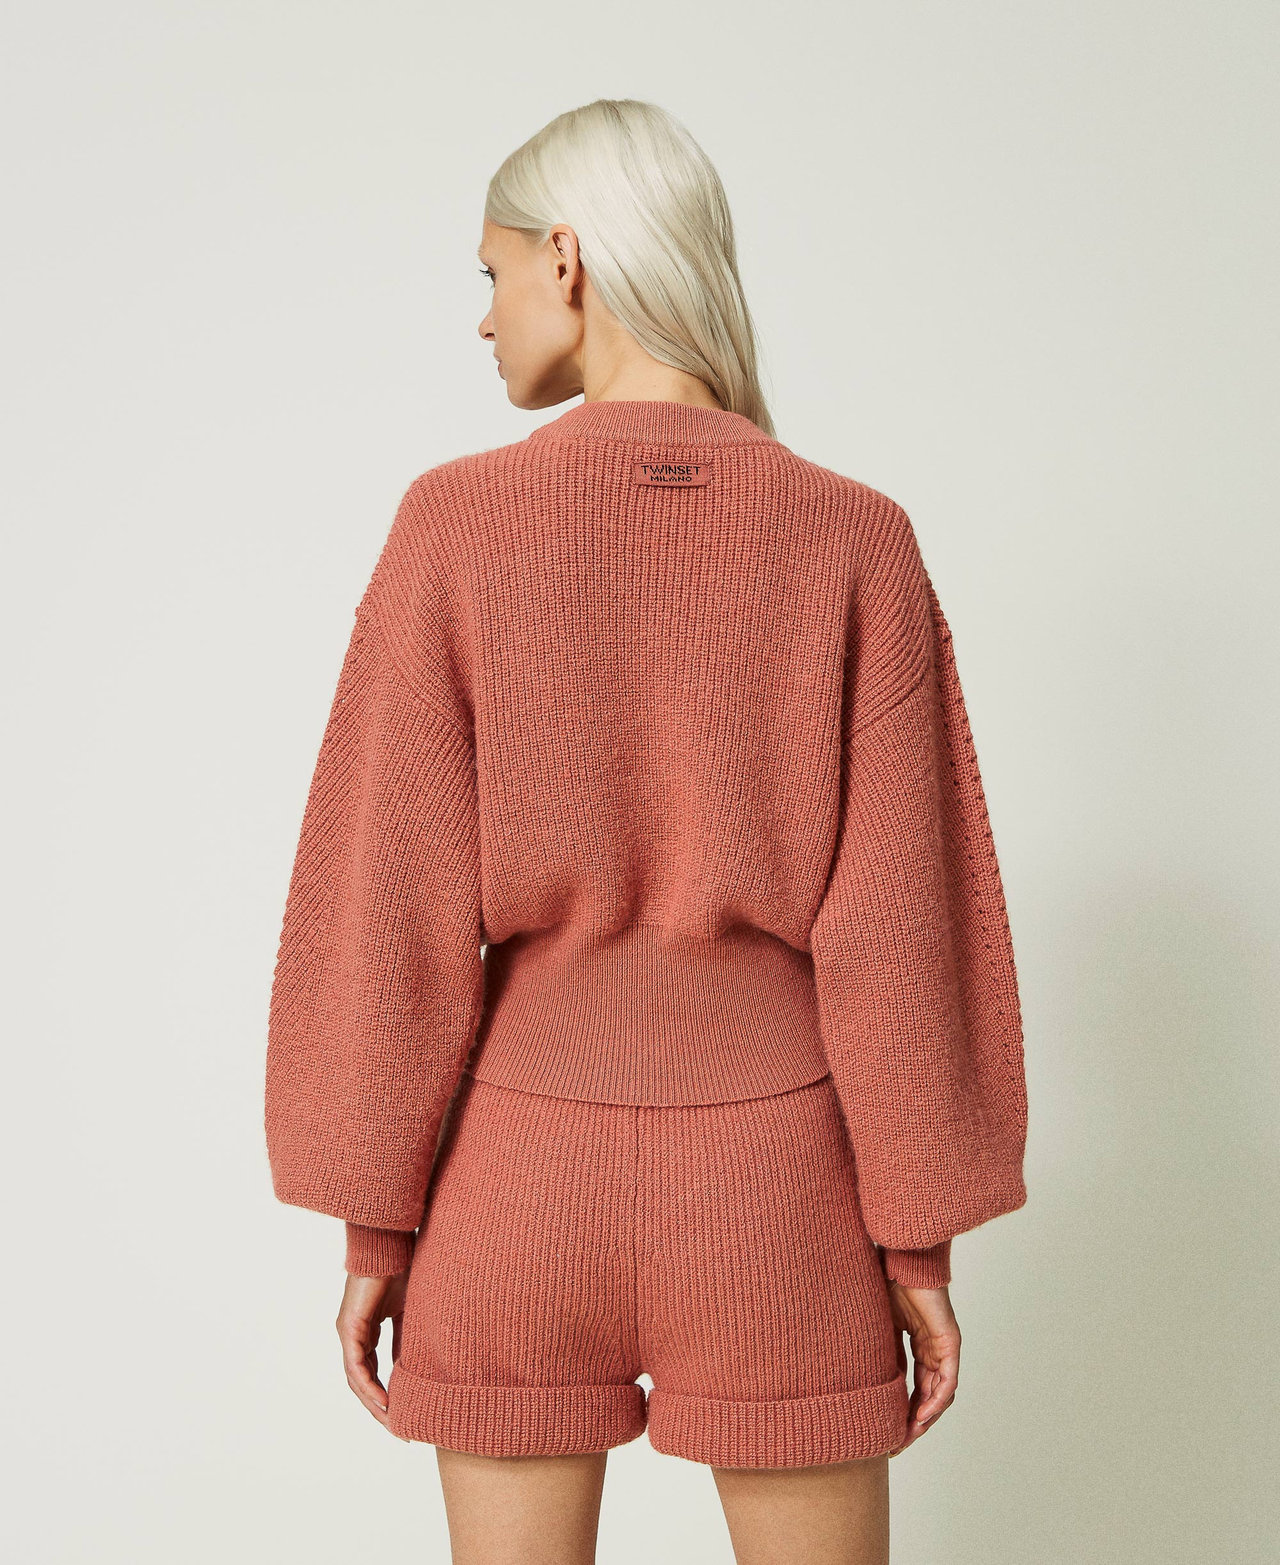 Ribbed wool and alpaca knit shorts Rosette Woman 232TT3192-03